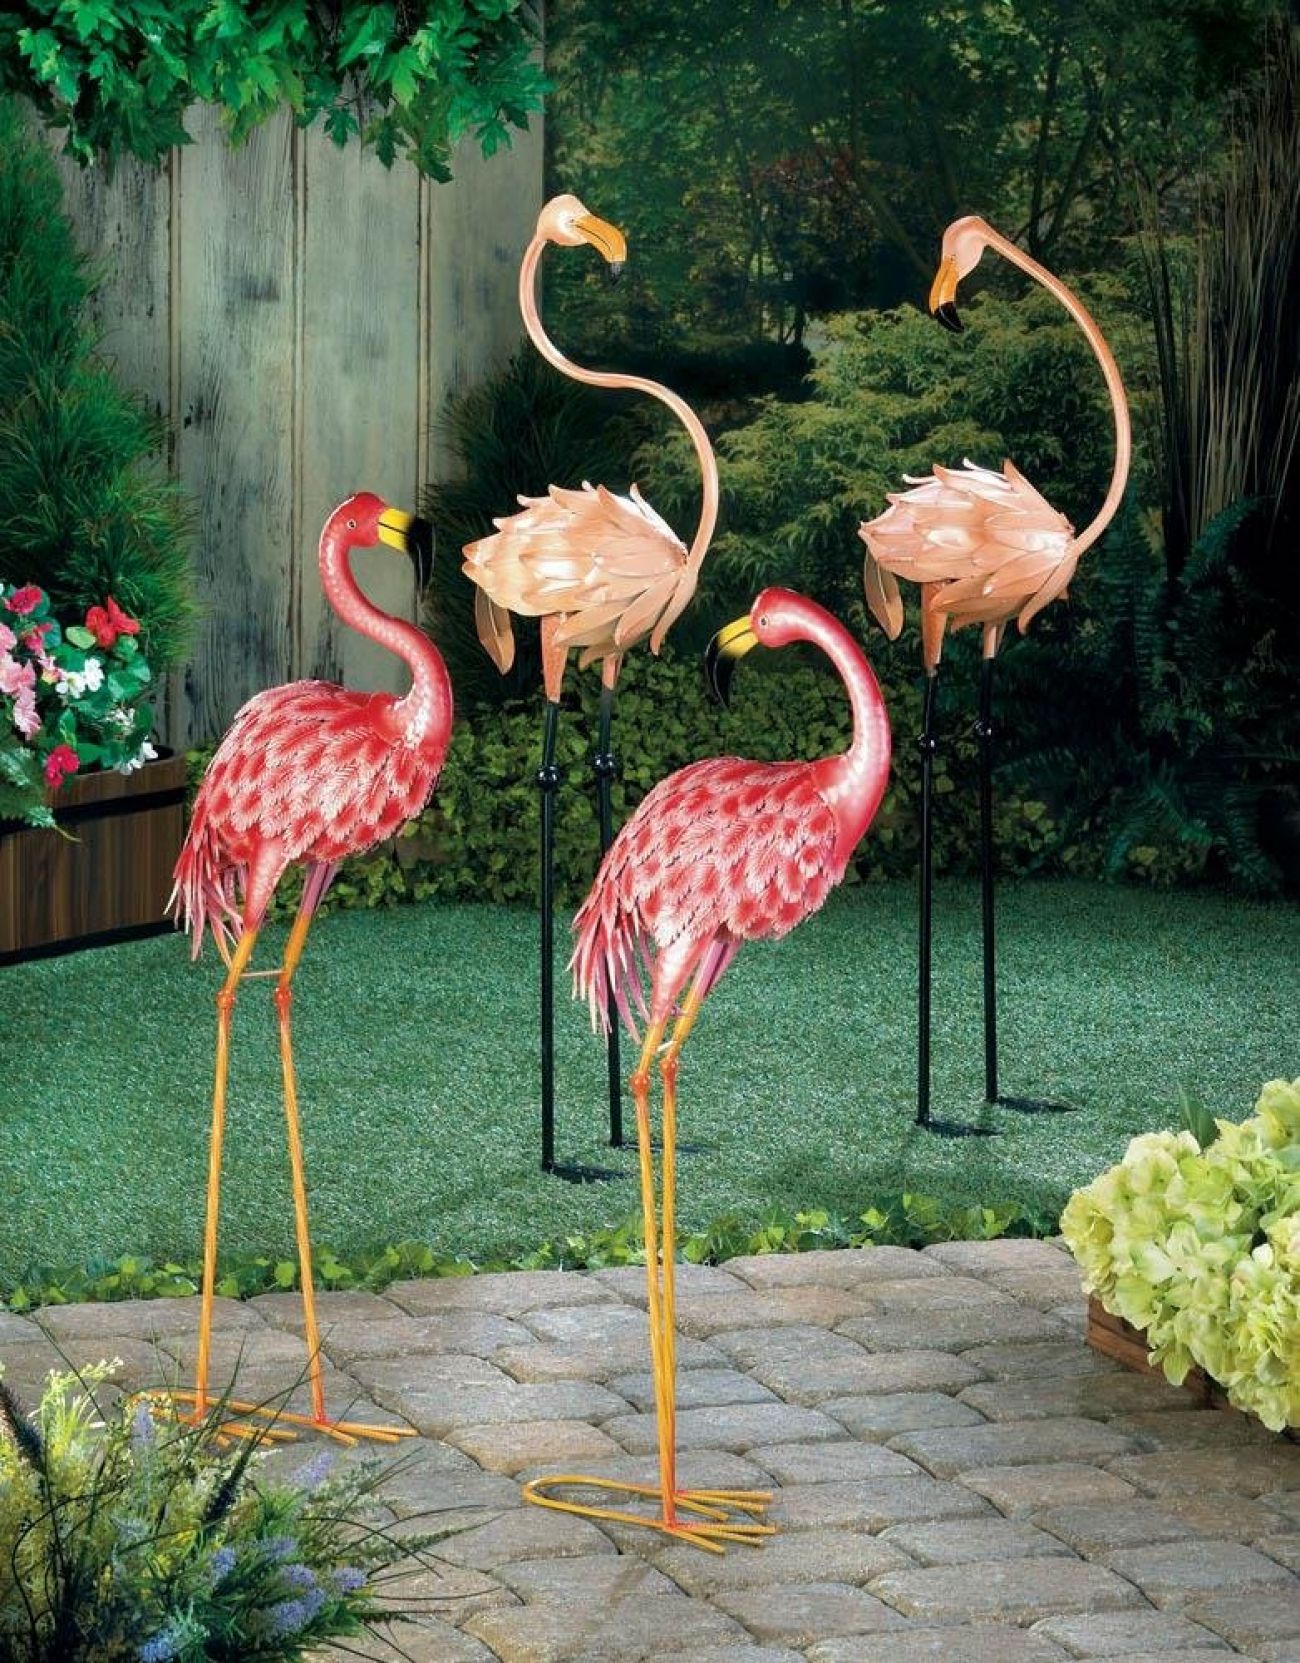 Bright Standing Flamingo